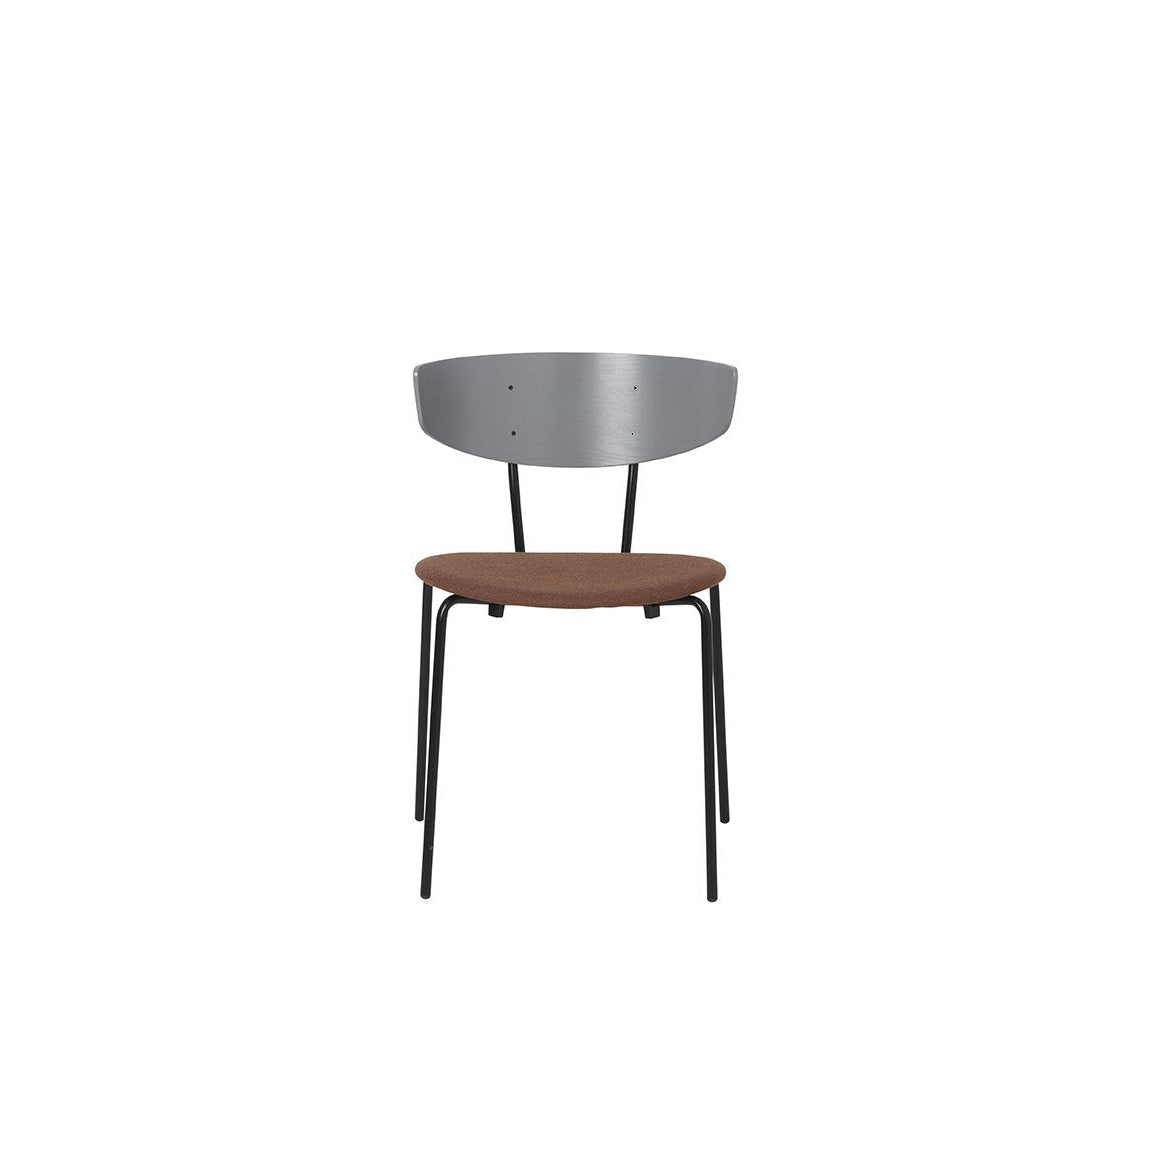 Ferm Living Herman Chair, Gray/Rust